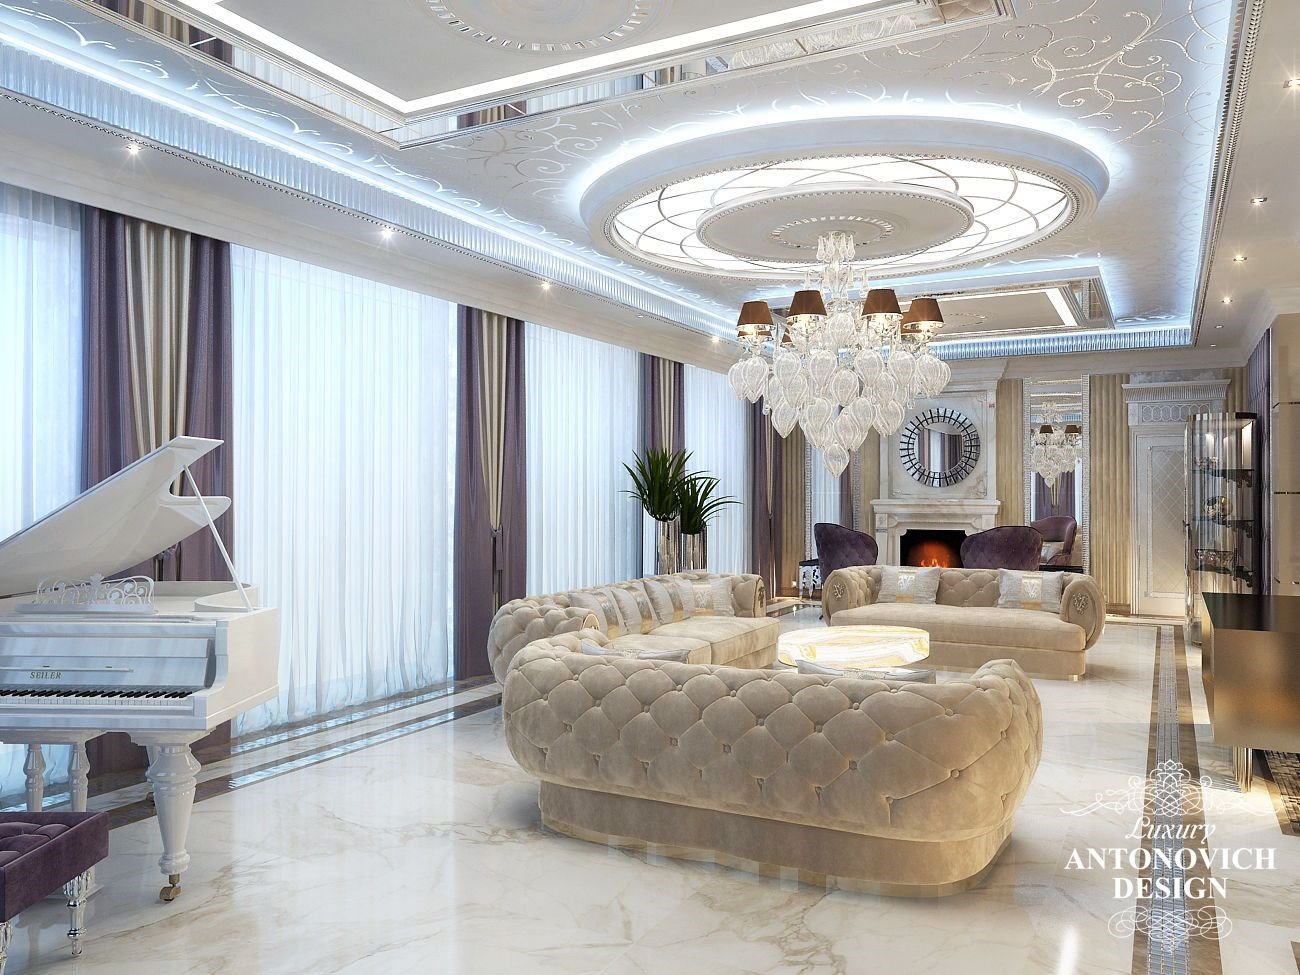 Luxury-Antonovich-Design-gostinnaya-07